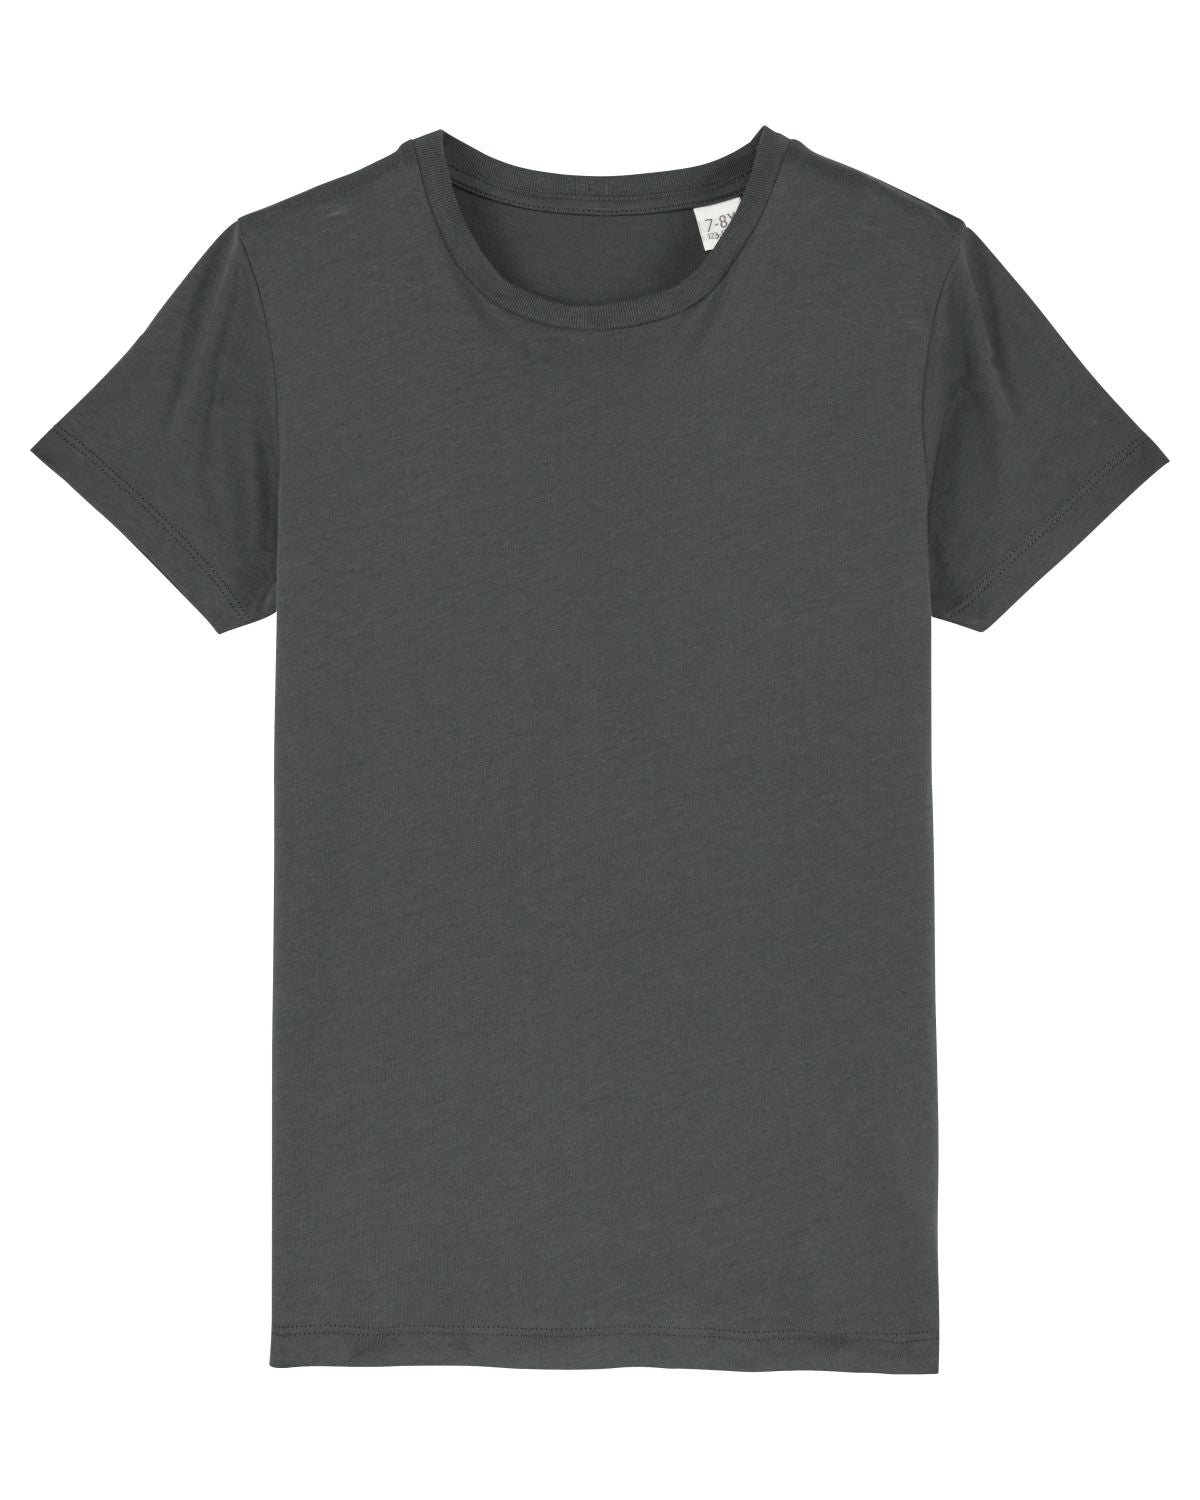 Stanley/Stella's - Mini Creator T-shirt - Anthracite